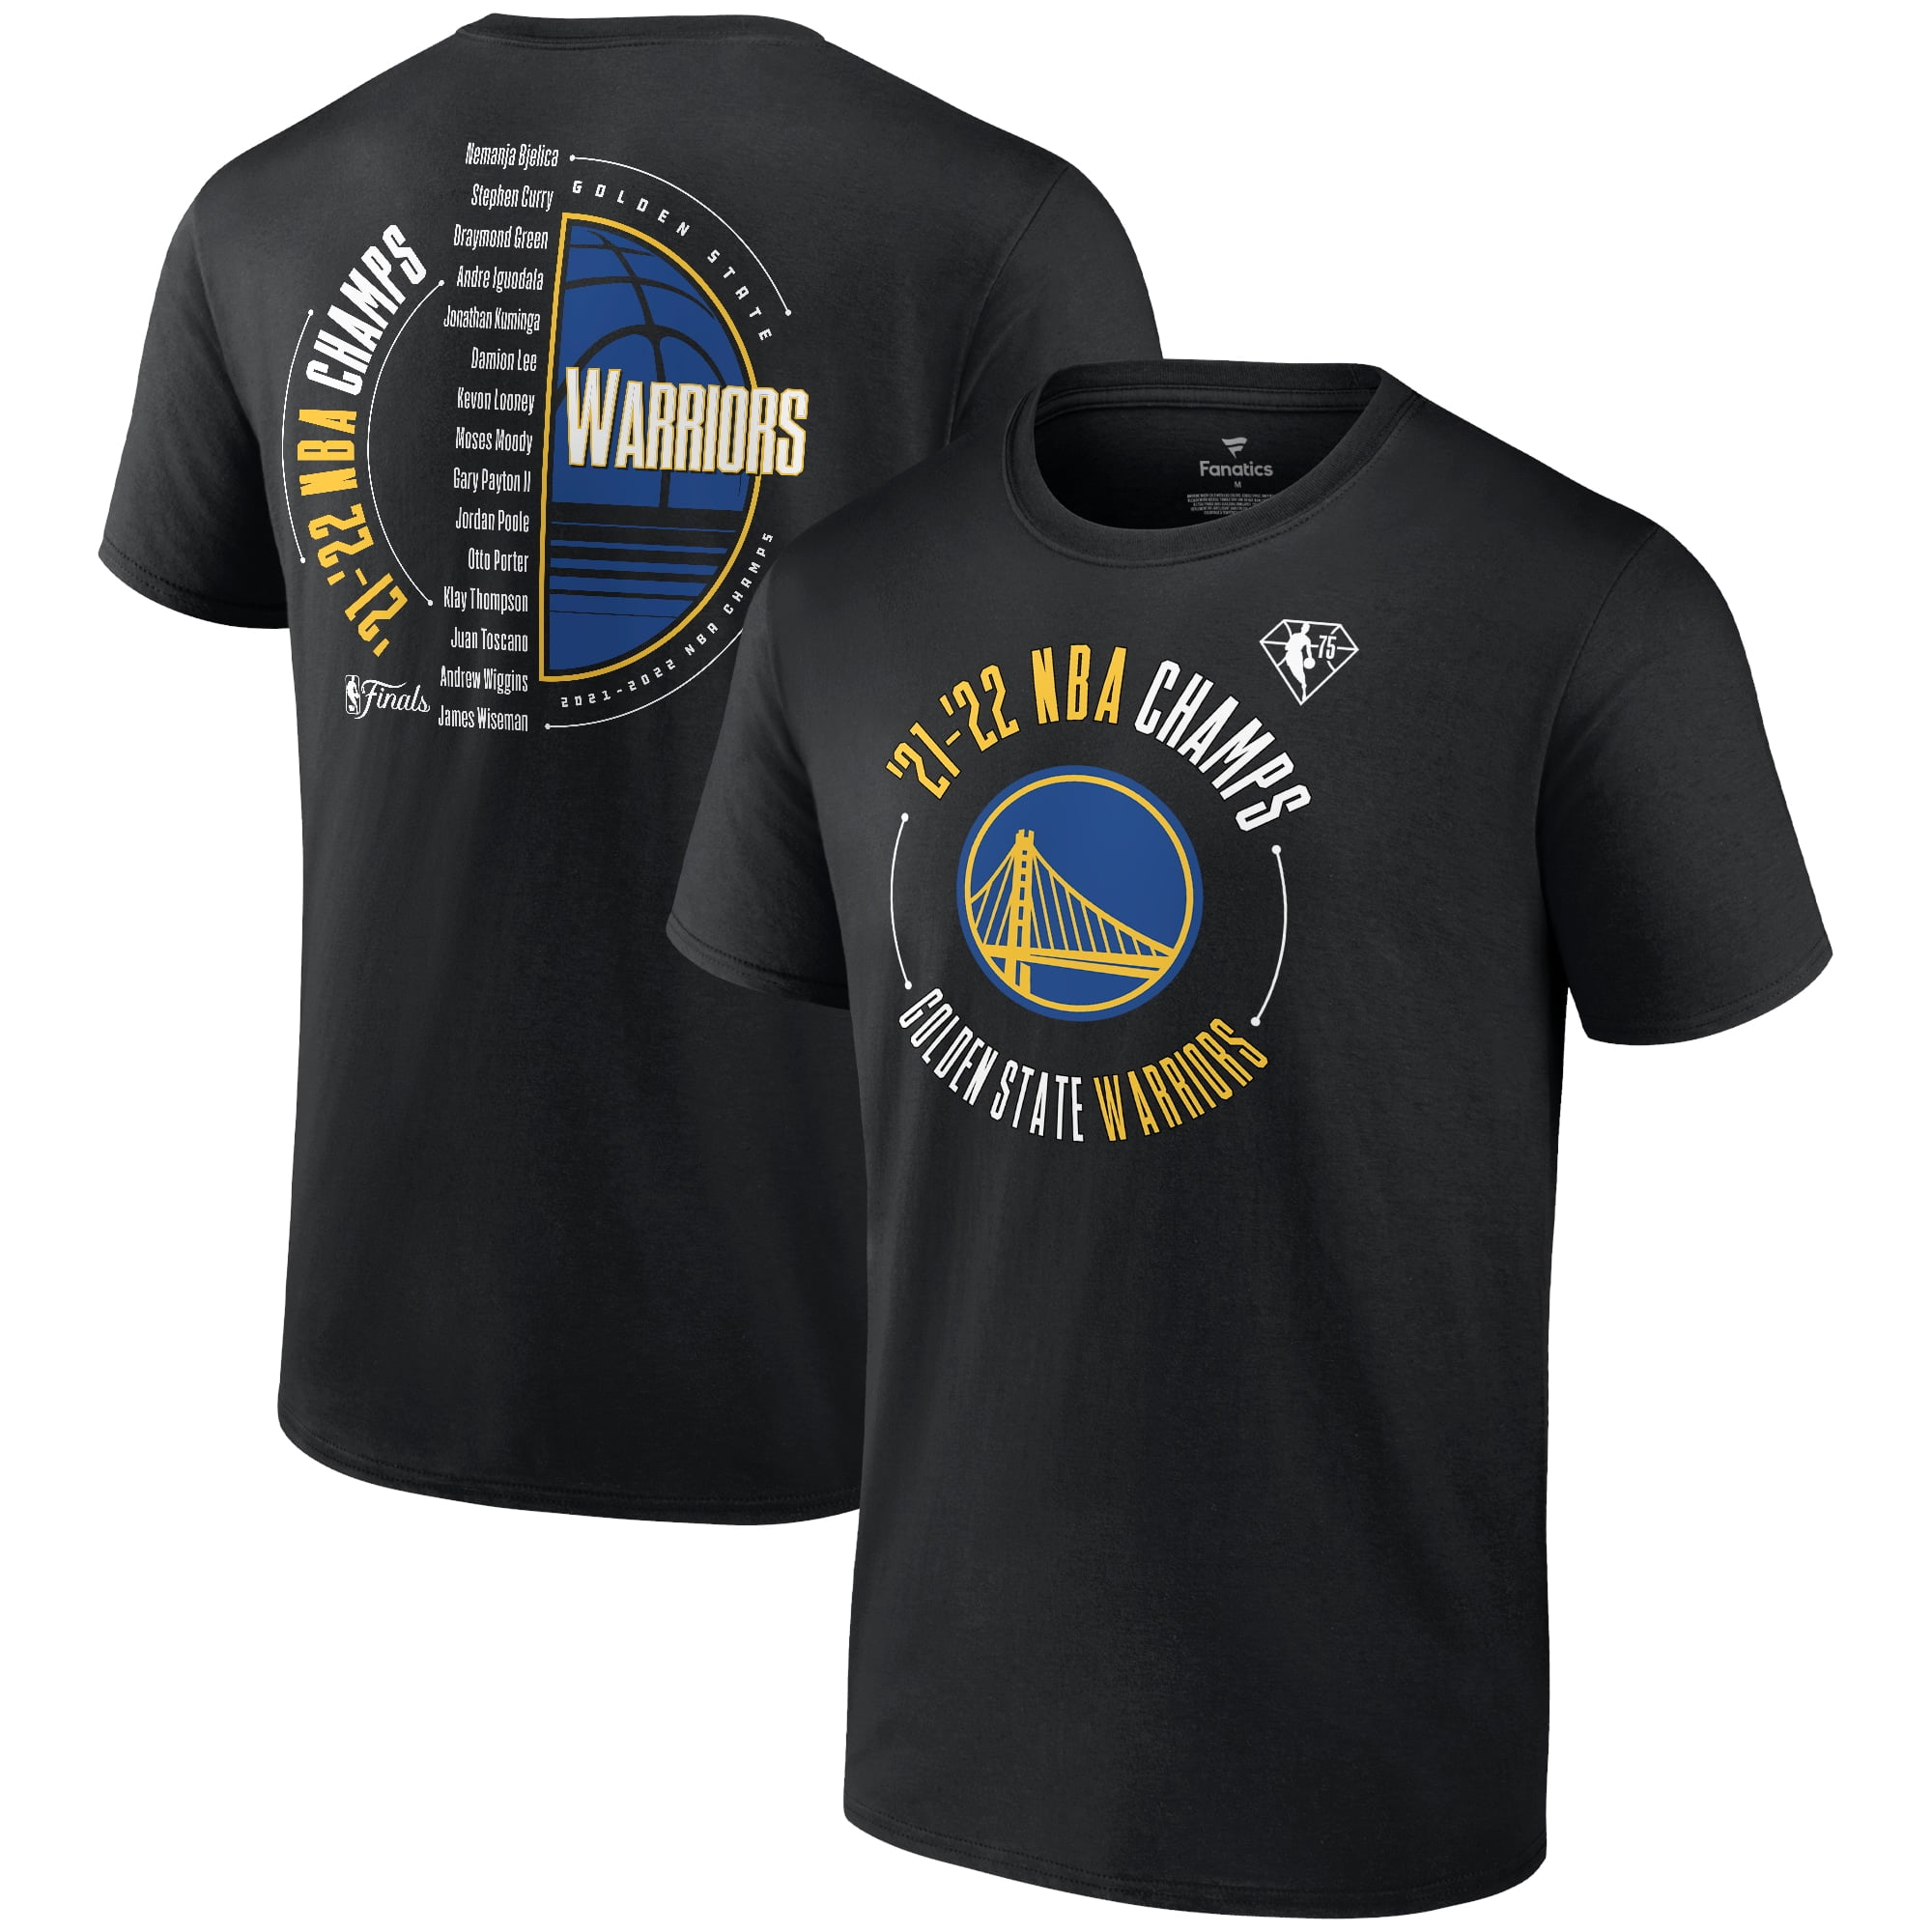 Warriors 2015 NBA Finals: Shop Golden State apparel, gear and more 